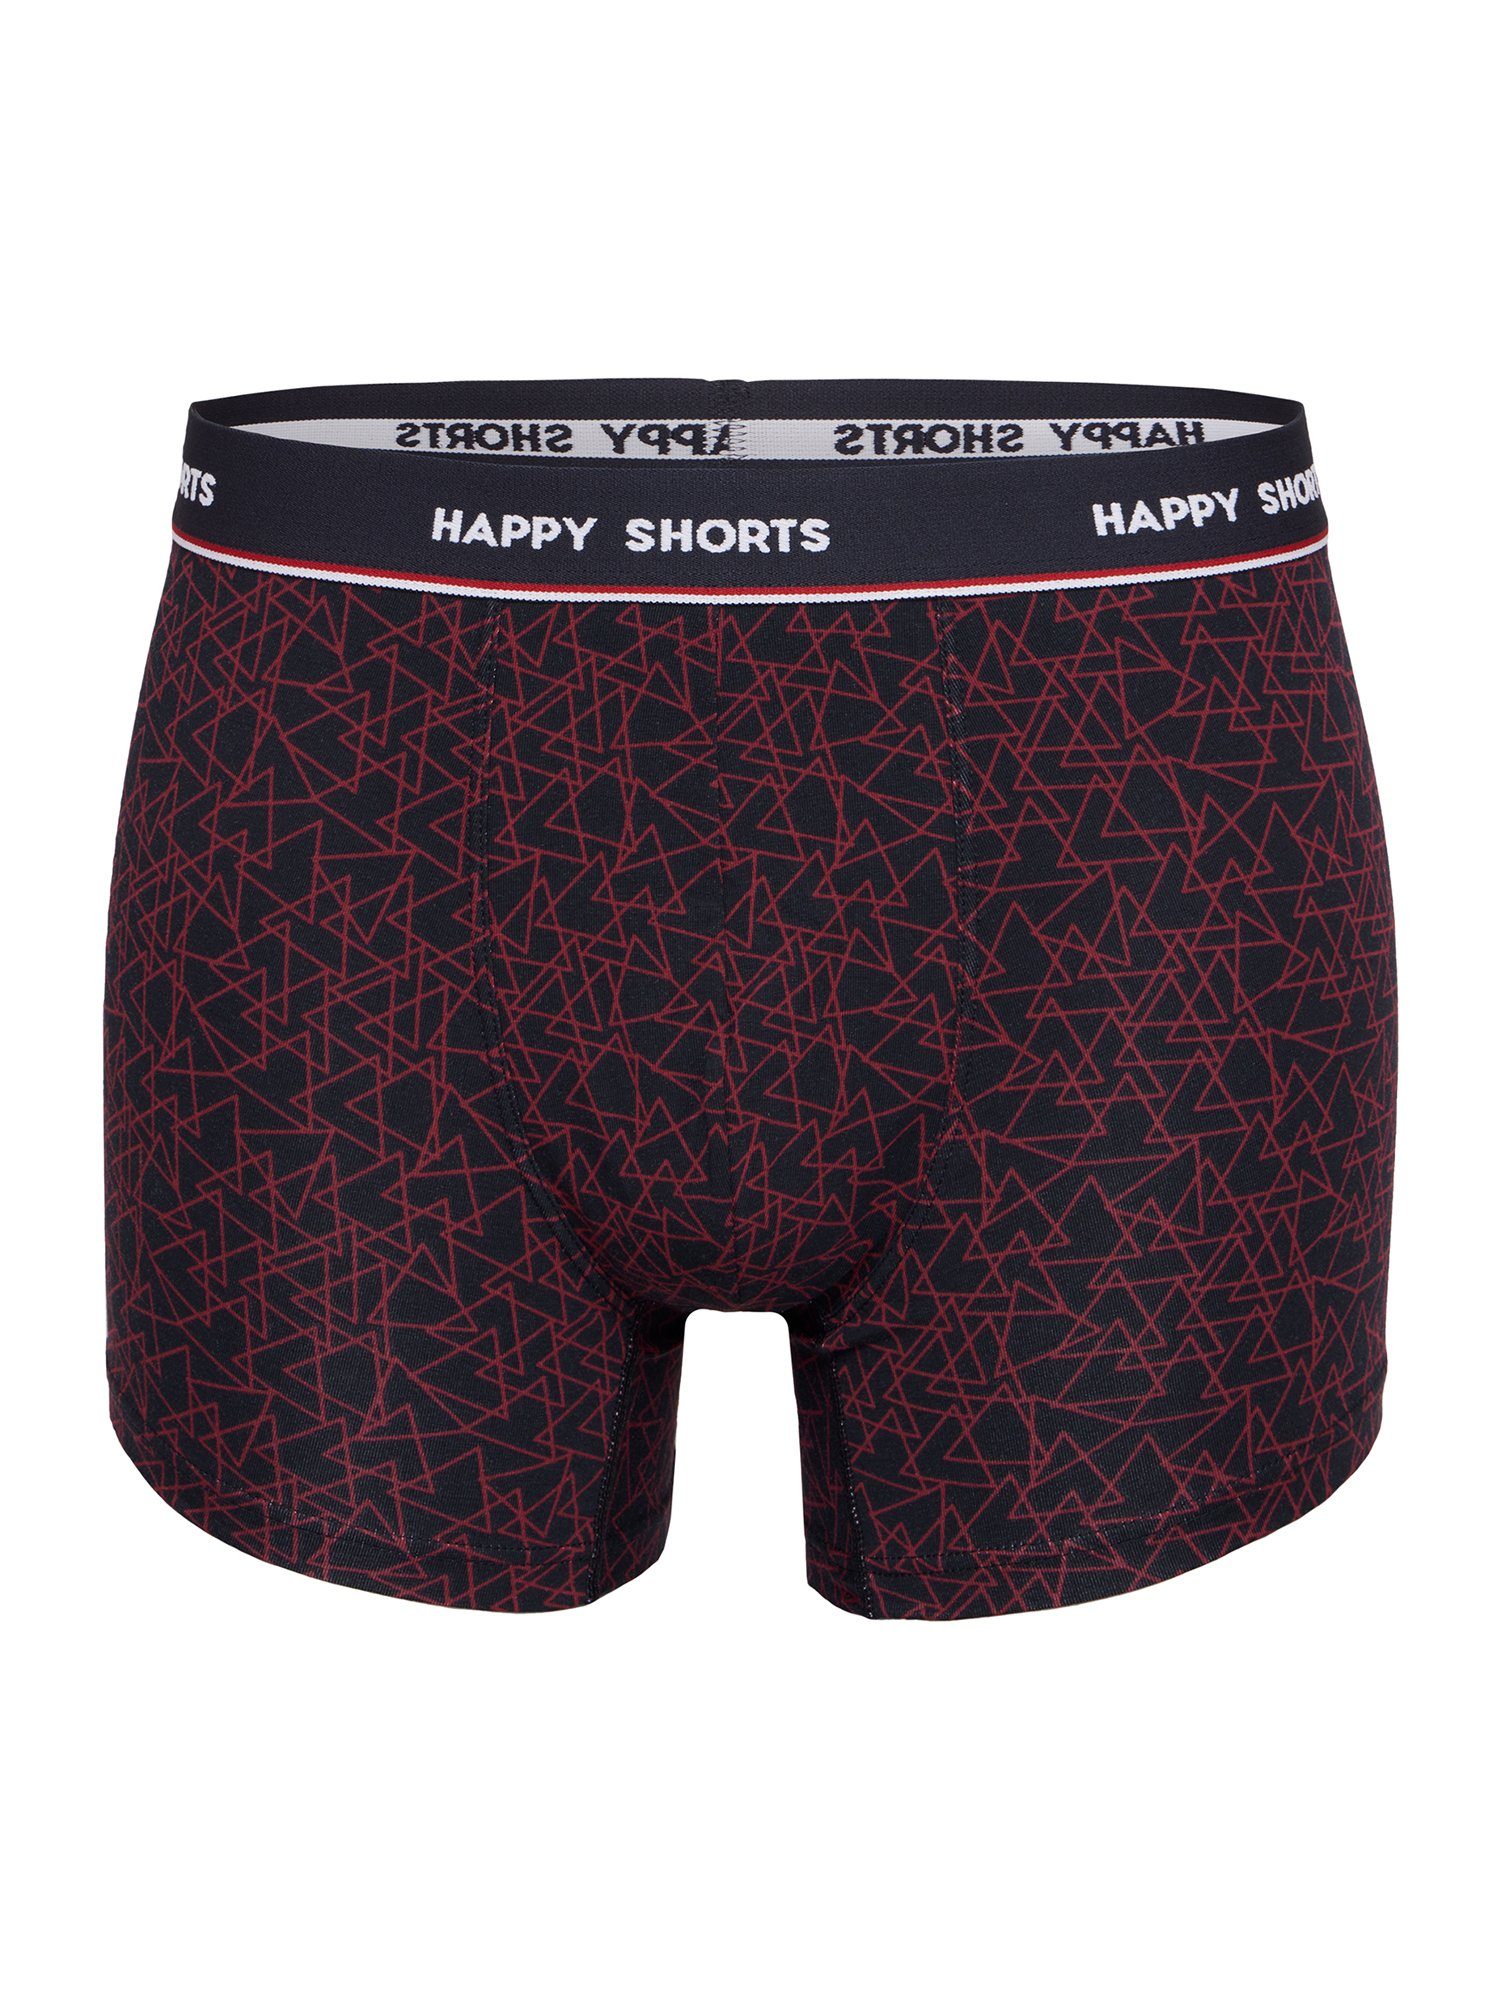 HAPPY SHORTS Retro Pants Trunks Retro-shorts (2-St) Triangles Red unterhose Retro-Boxer